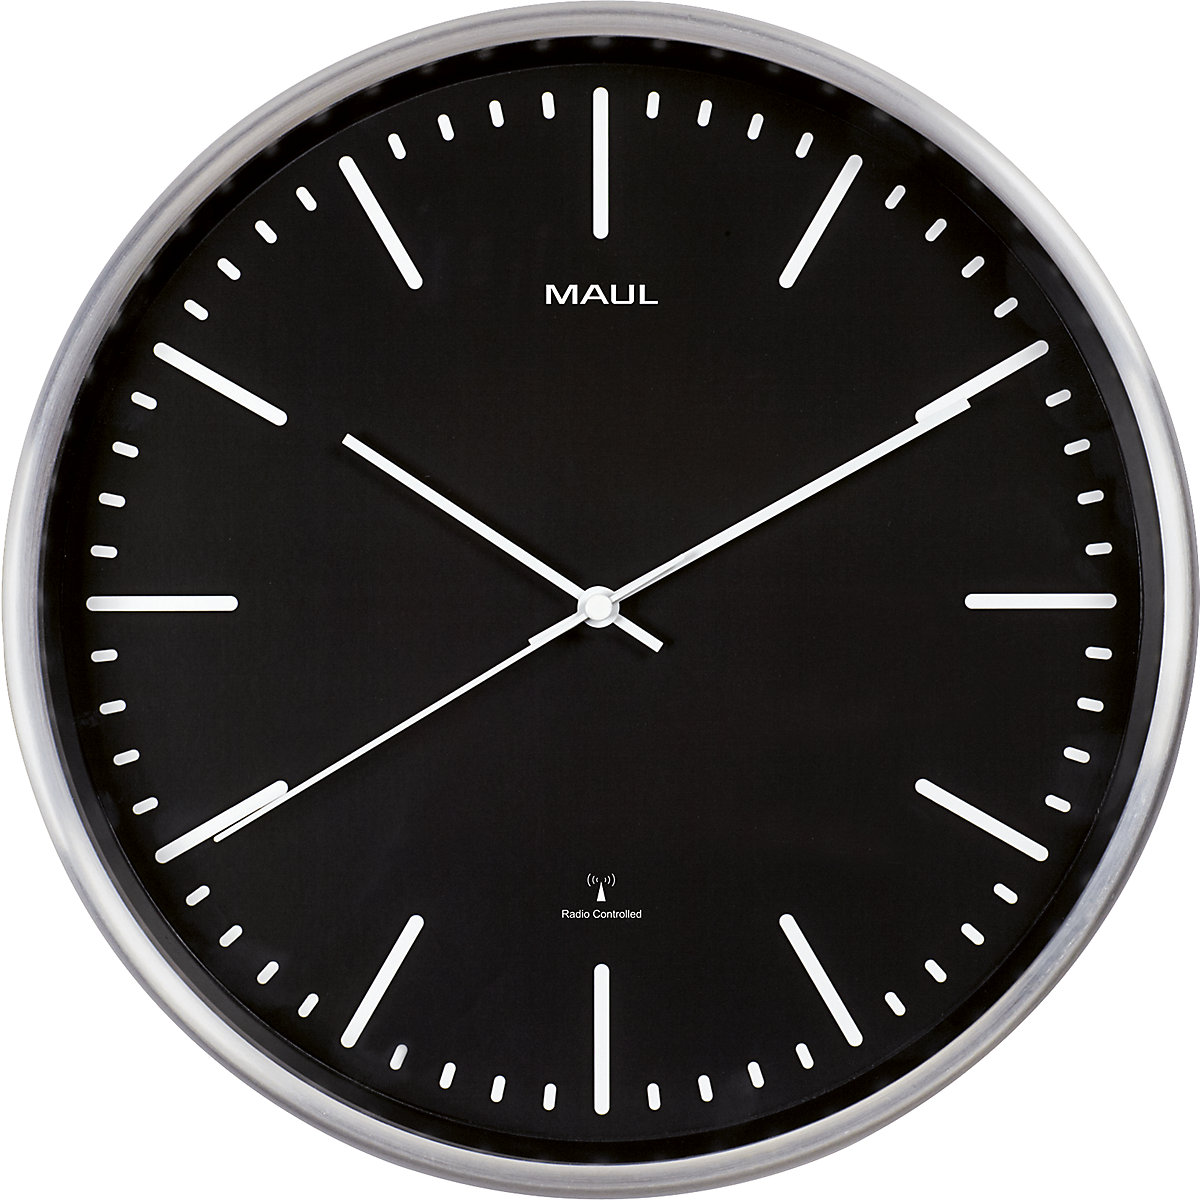 MAULfly wall clock – MAUL, brushed aluminium, Ø 305 mm, radio synchronised time keeping mechanism, black-4